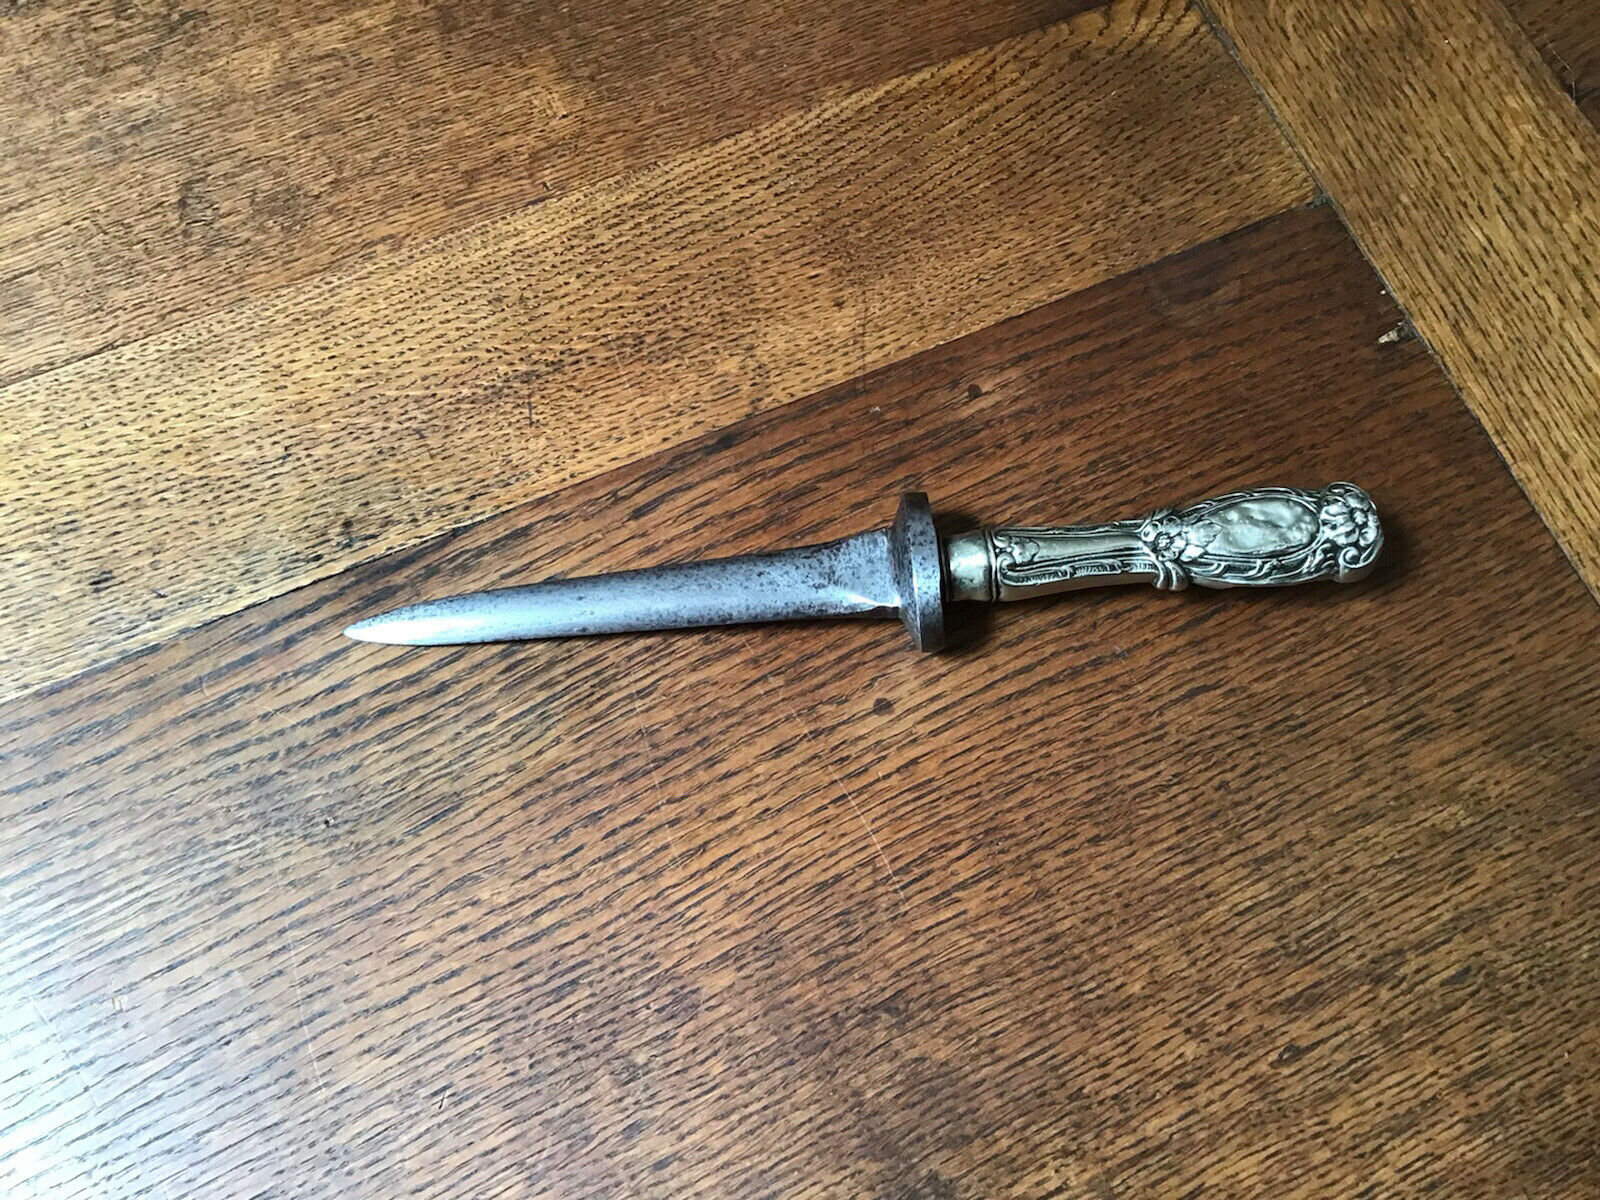 Possible Civil War Knife Dagger